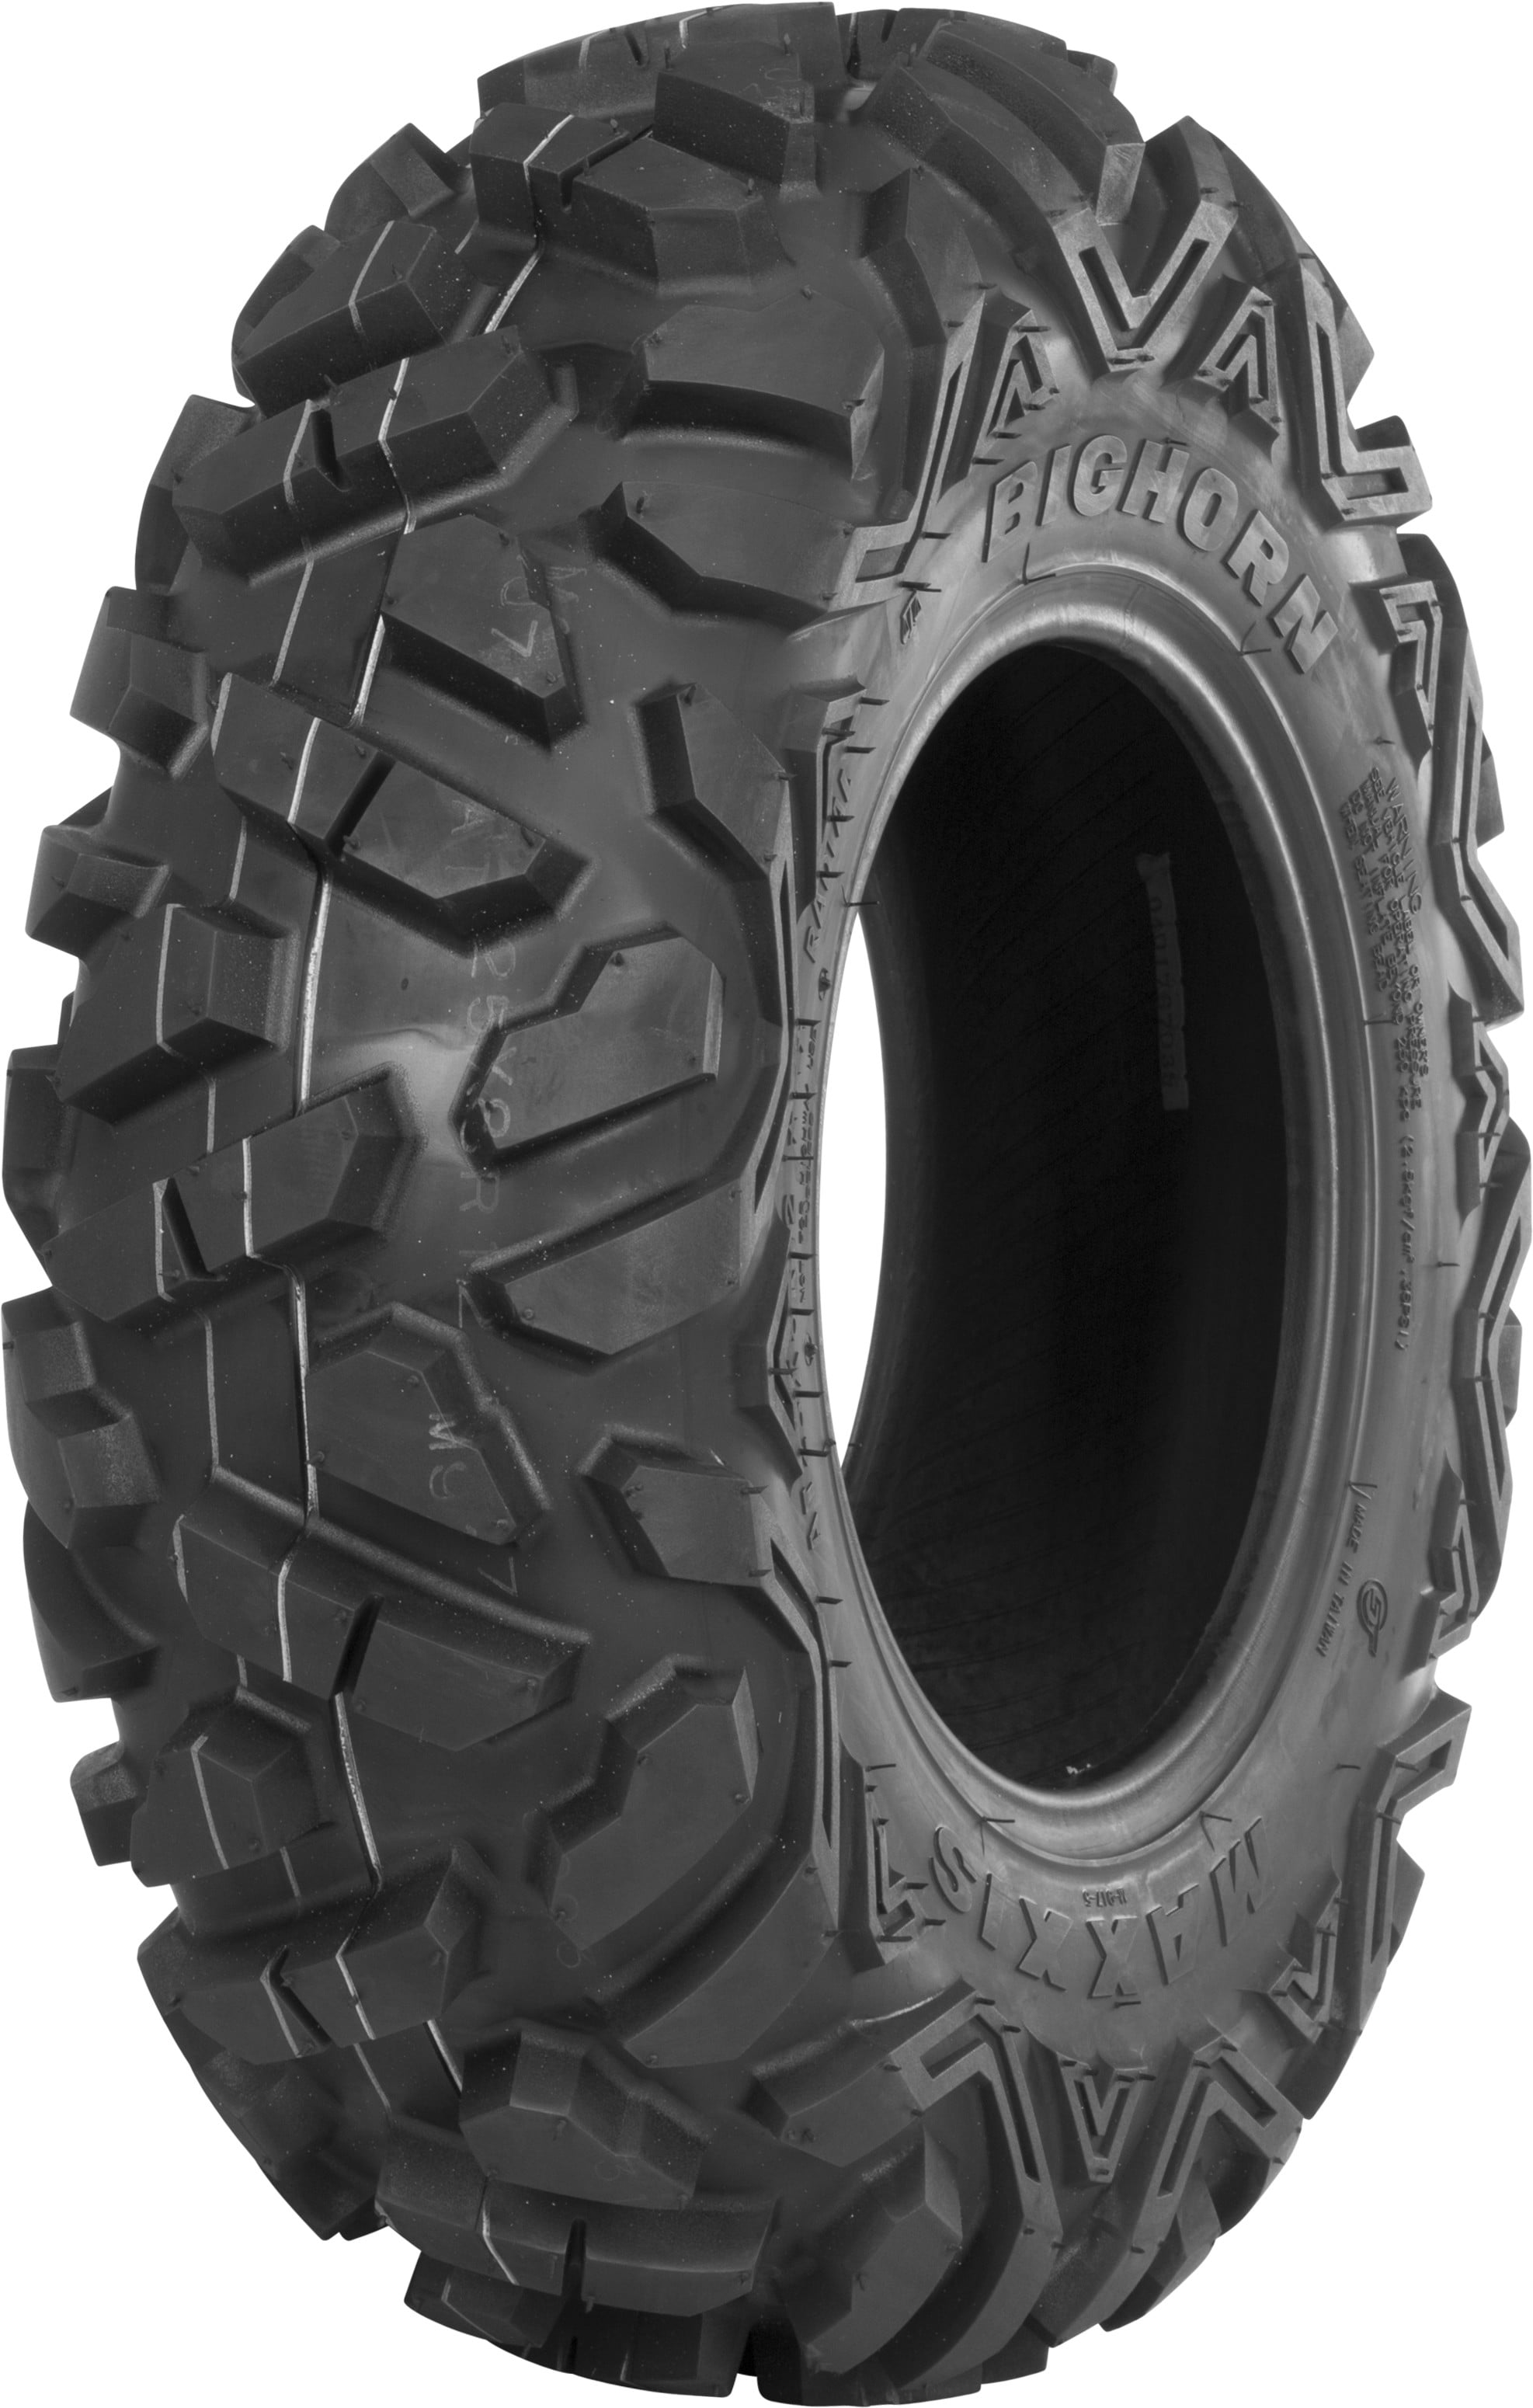 Maxxis Roxxzilla 32x10-r14 Competition Compound 8ply Rock Crawler ATV/UTV Tires Set of 4 